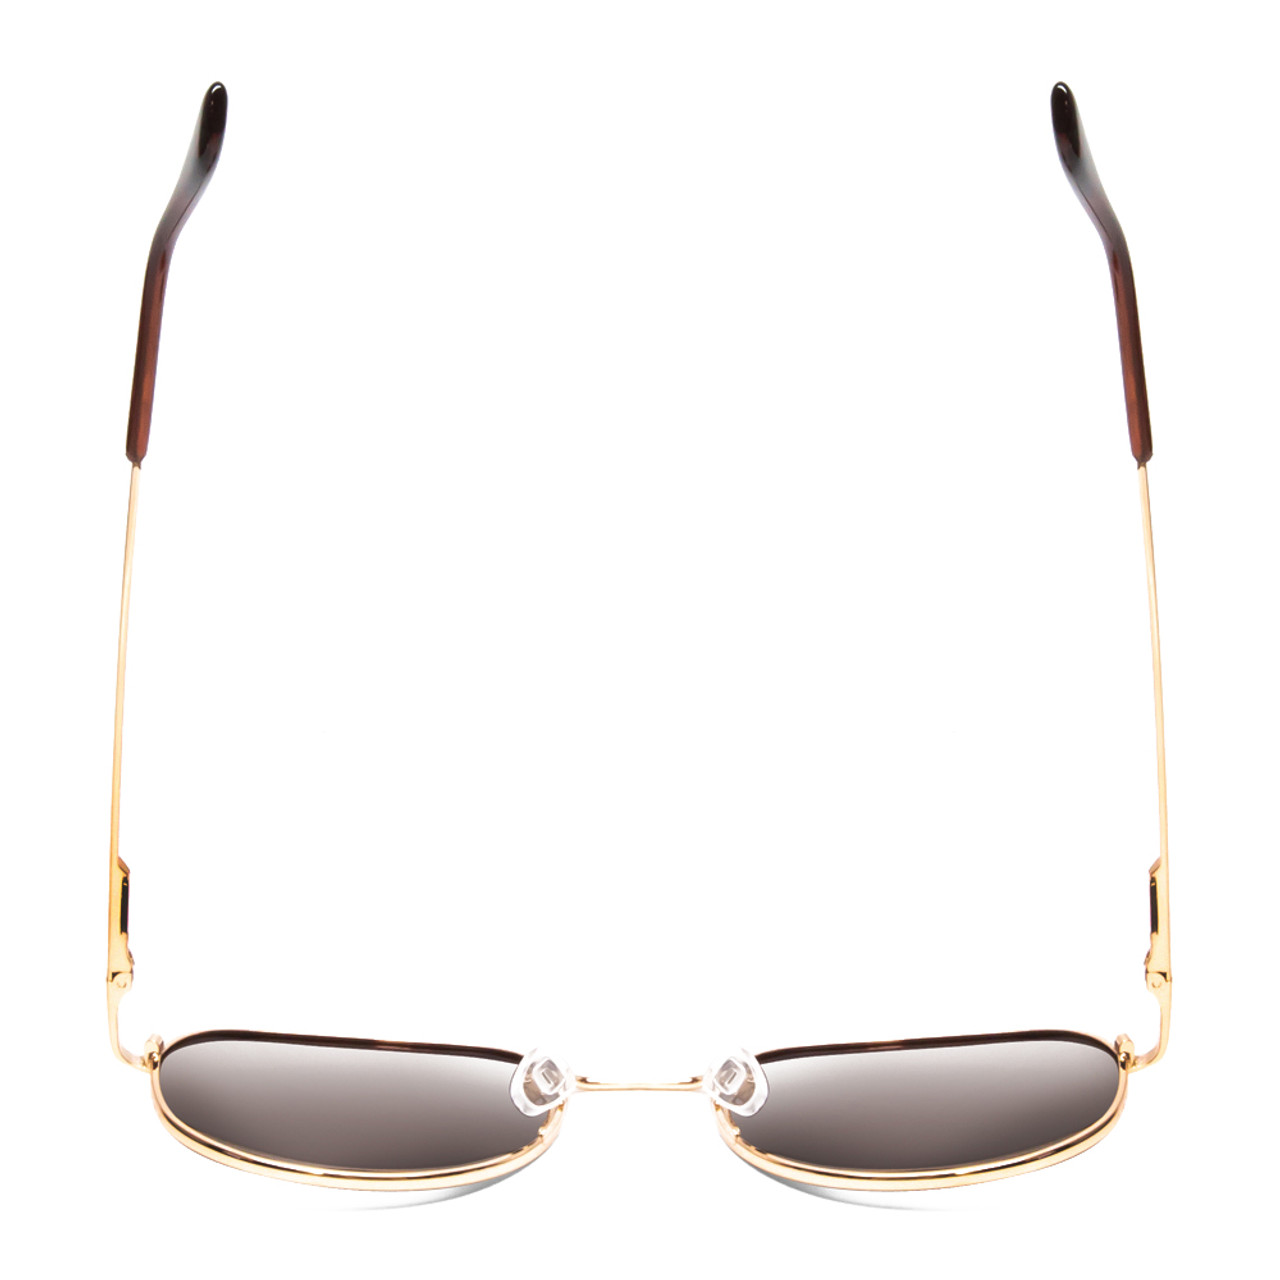 Top View of Coyote Elite Unisex Round Designer Polarized Sunglasses Gold/Brown Gradient 50mm